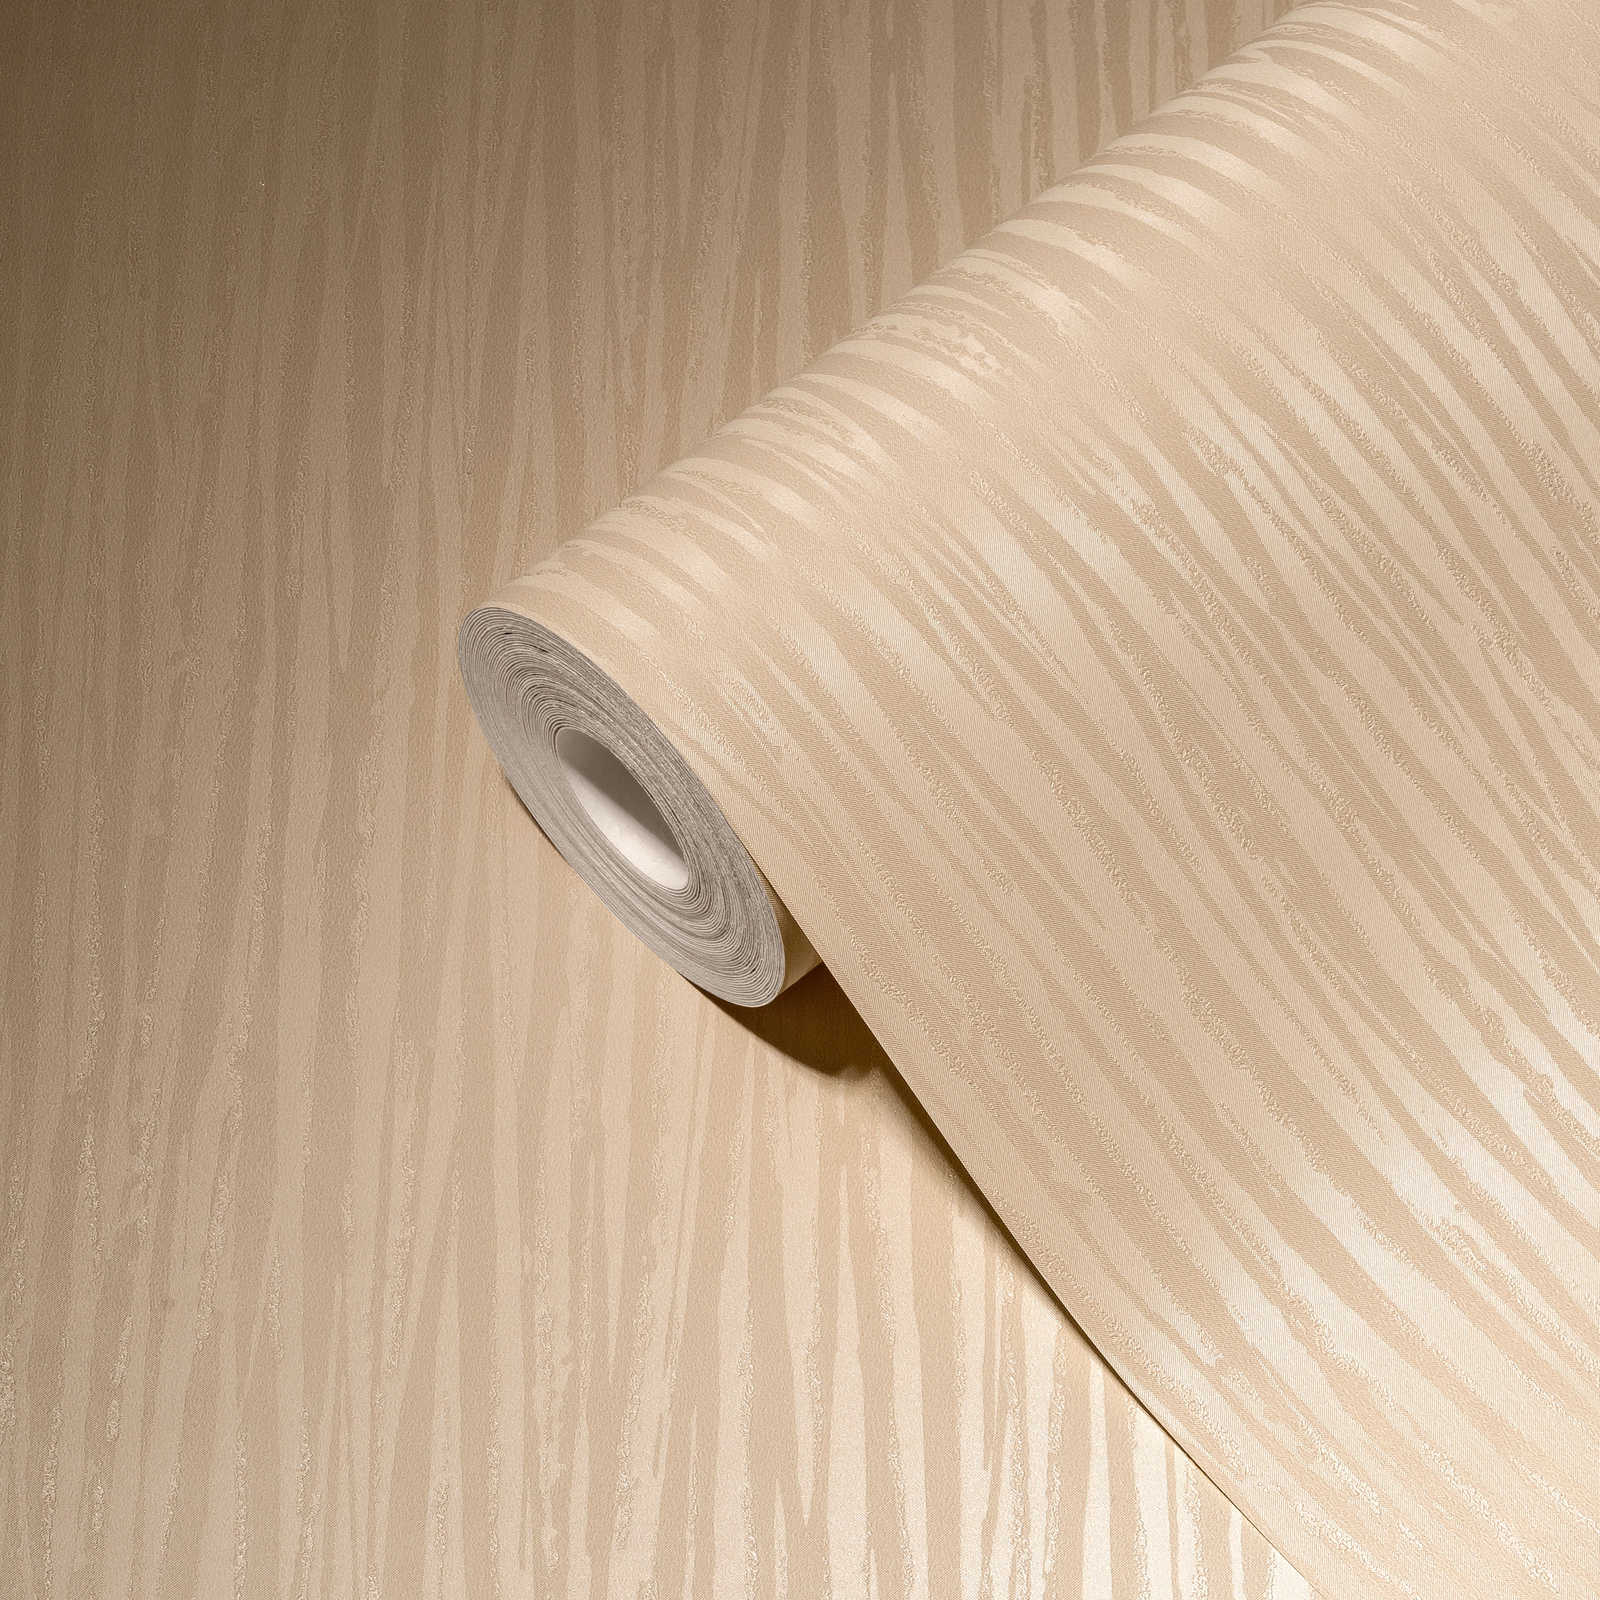             Plain wallpaper cream with metallic luster & hatch design
        